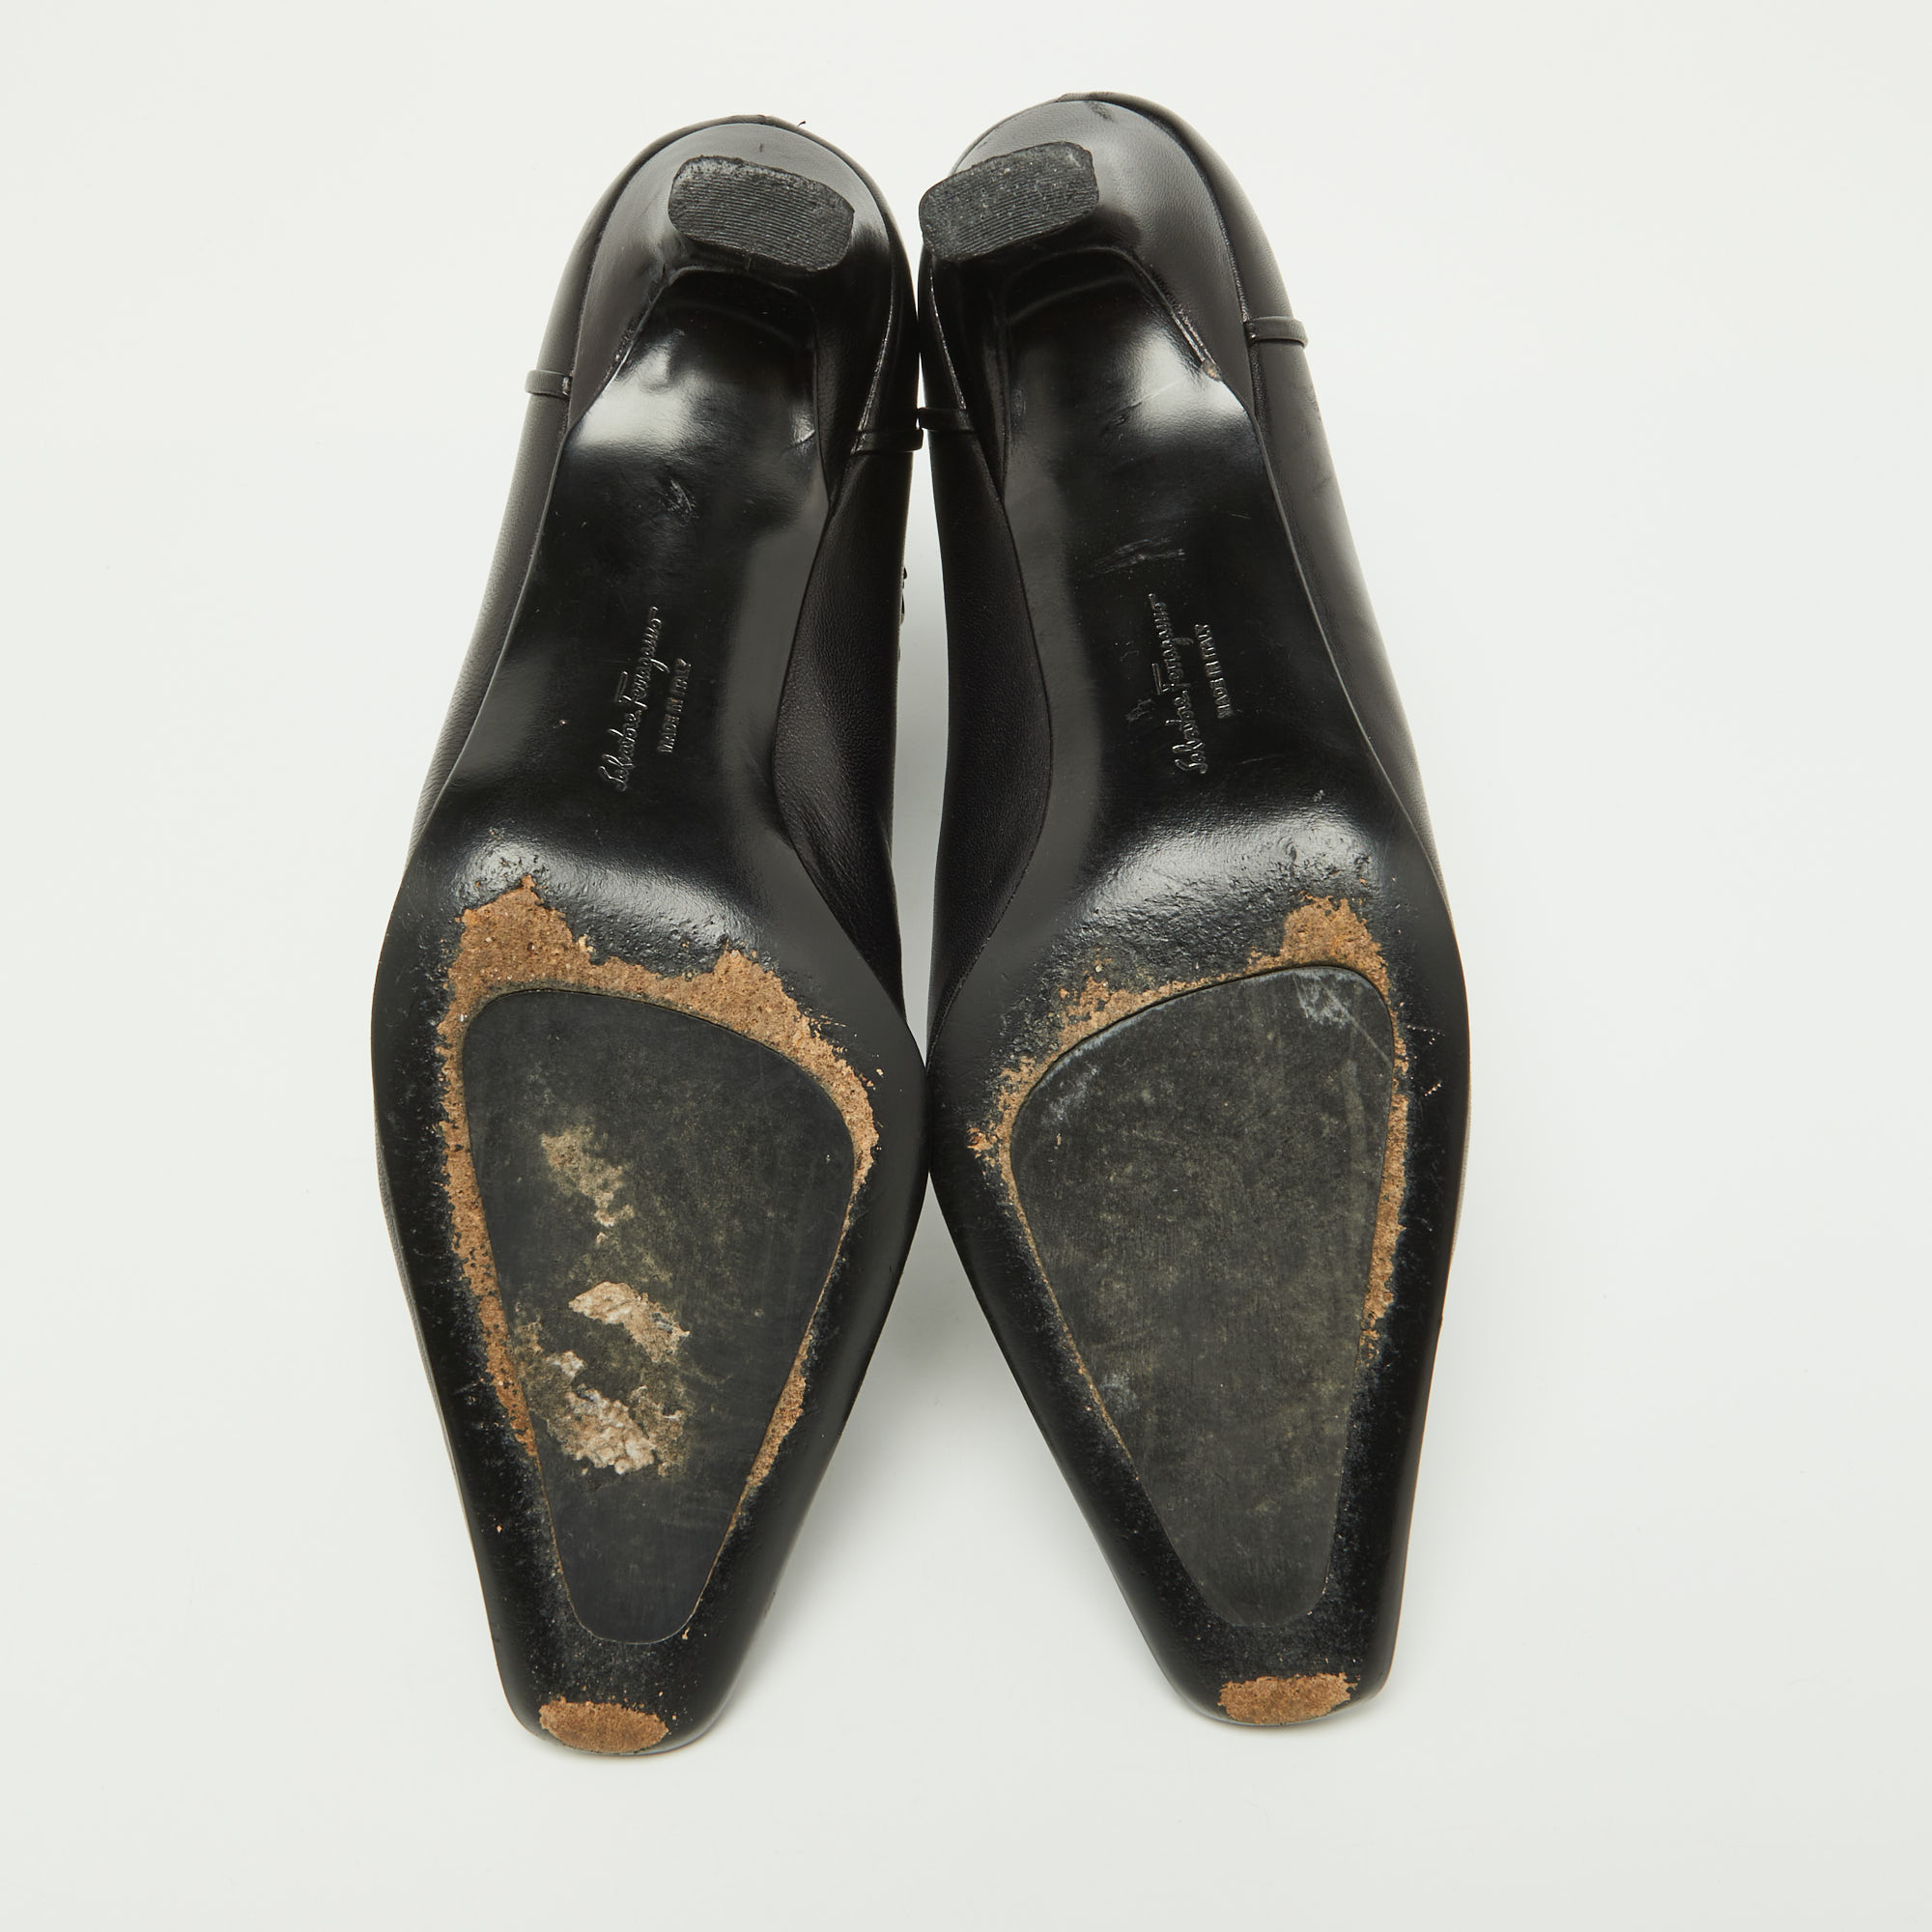 Salvatore Ferragamo Black Leather Gancini Lock Ankle Boots Size 38